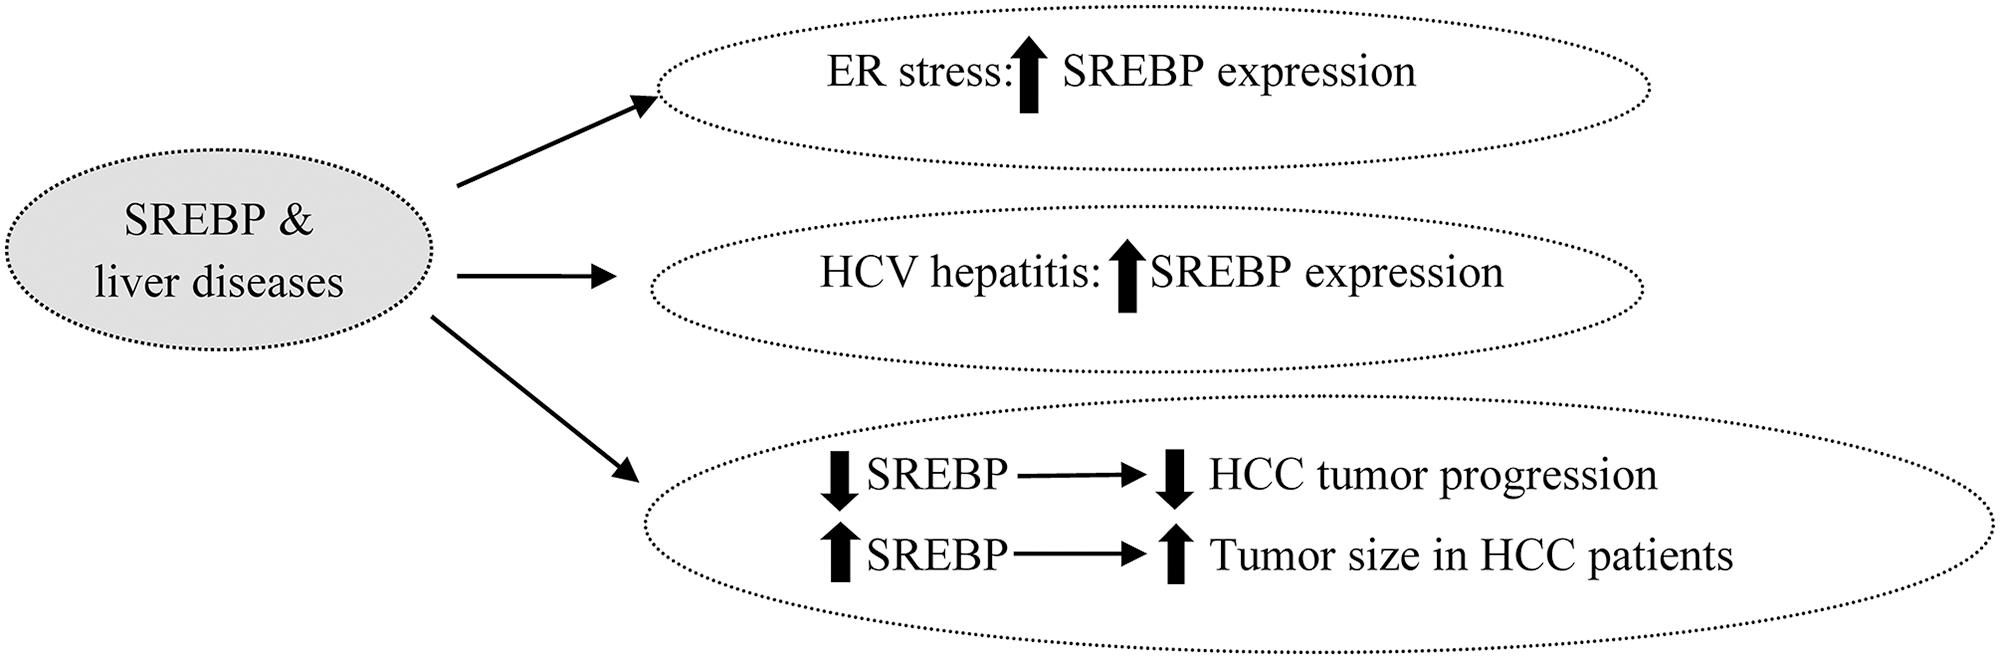 Diagram of the role of SREBPs in endoplasmic reticulum stress, hepatitis C virus infection and hepatic cancer.